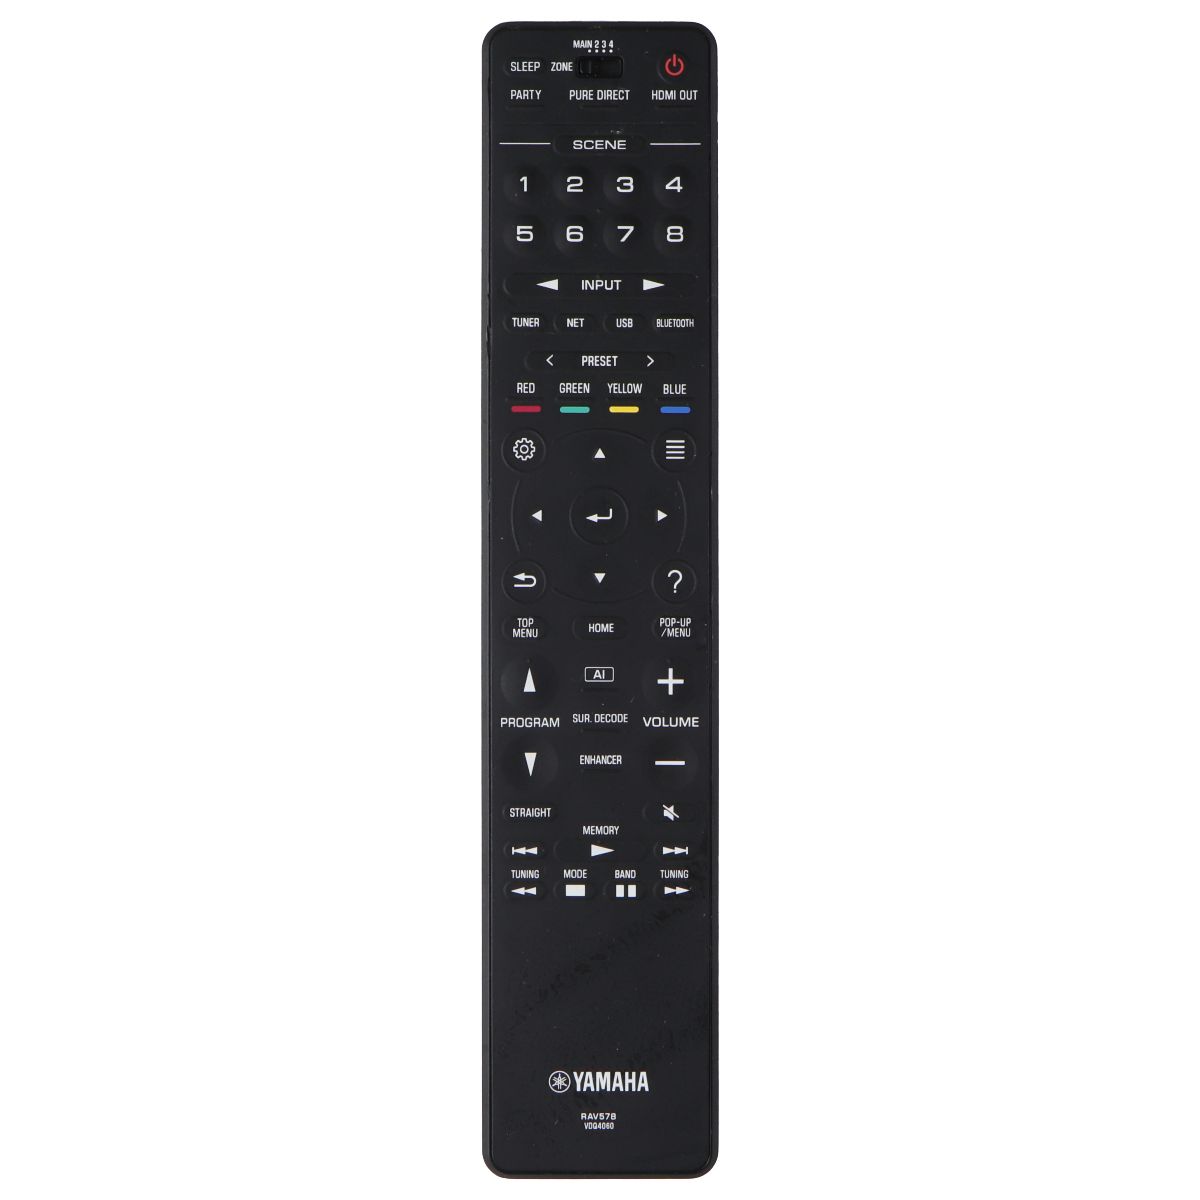 Yamaha OEM Remote Control for Select Yamaha Systems - Black (RAV578 / VDQ4060) TV, Video & Audio Accessories - Remote Controls Yamaha    - Simple Cell Bulk Wholesale Pricing - USA Seller